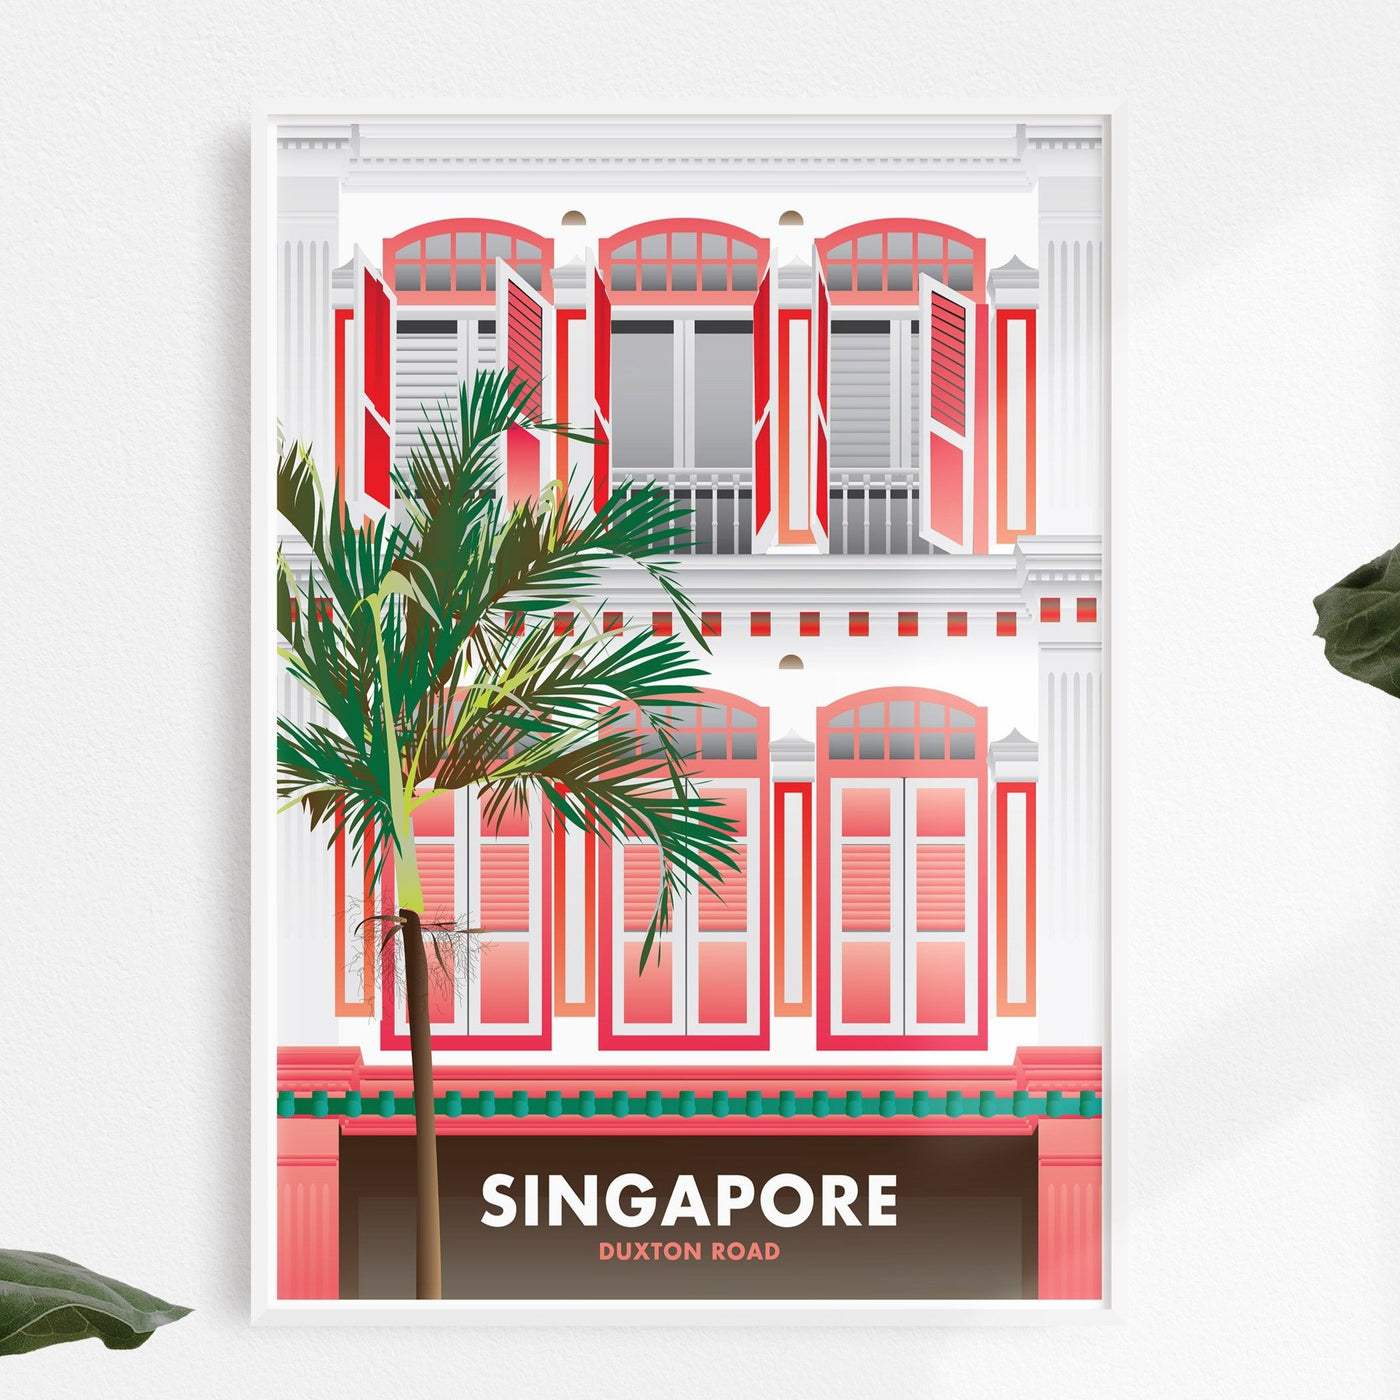 Singapore - Duxton Road Shophouse Illustrated Print